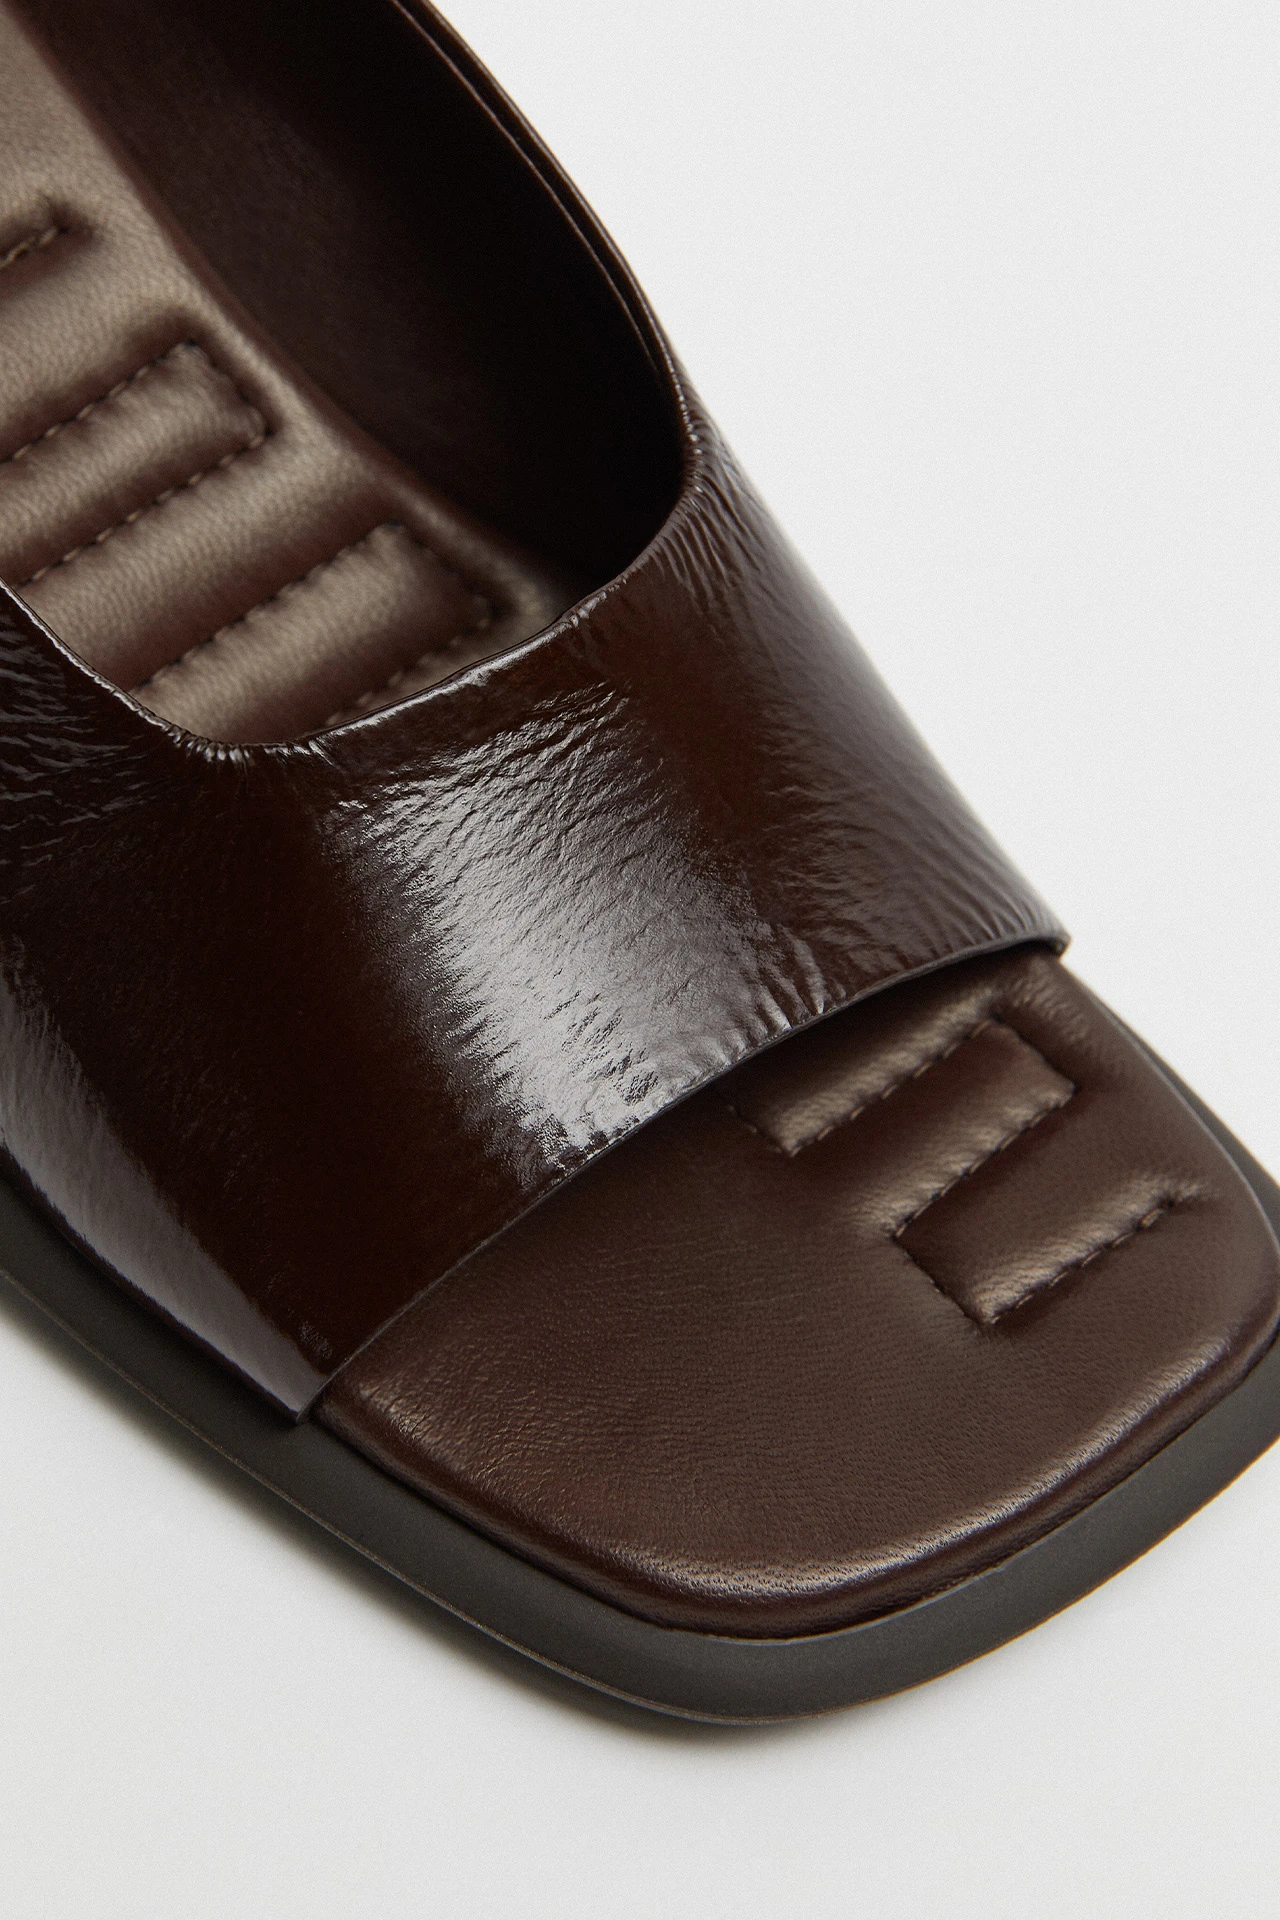 Miista-janaina-dark-brown-mule-sandals-05